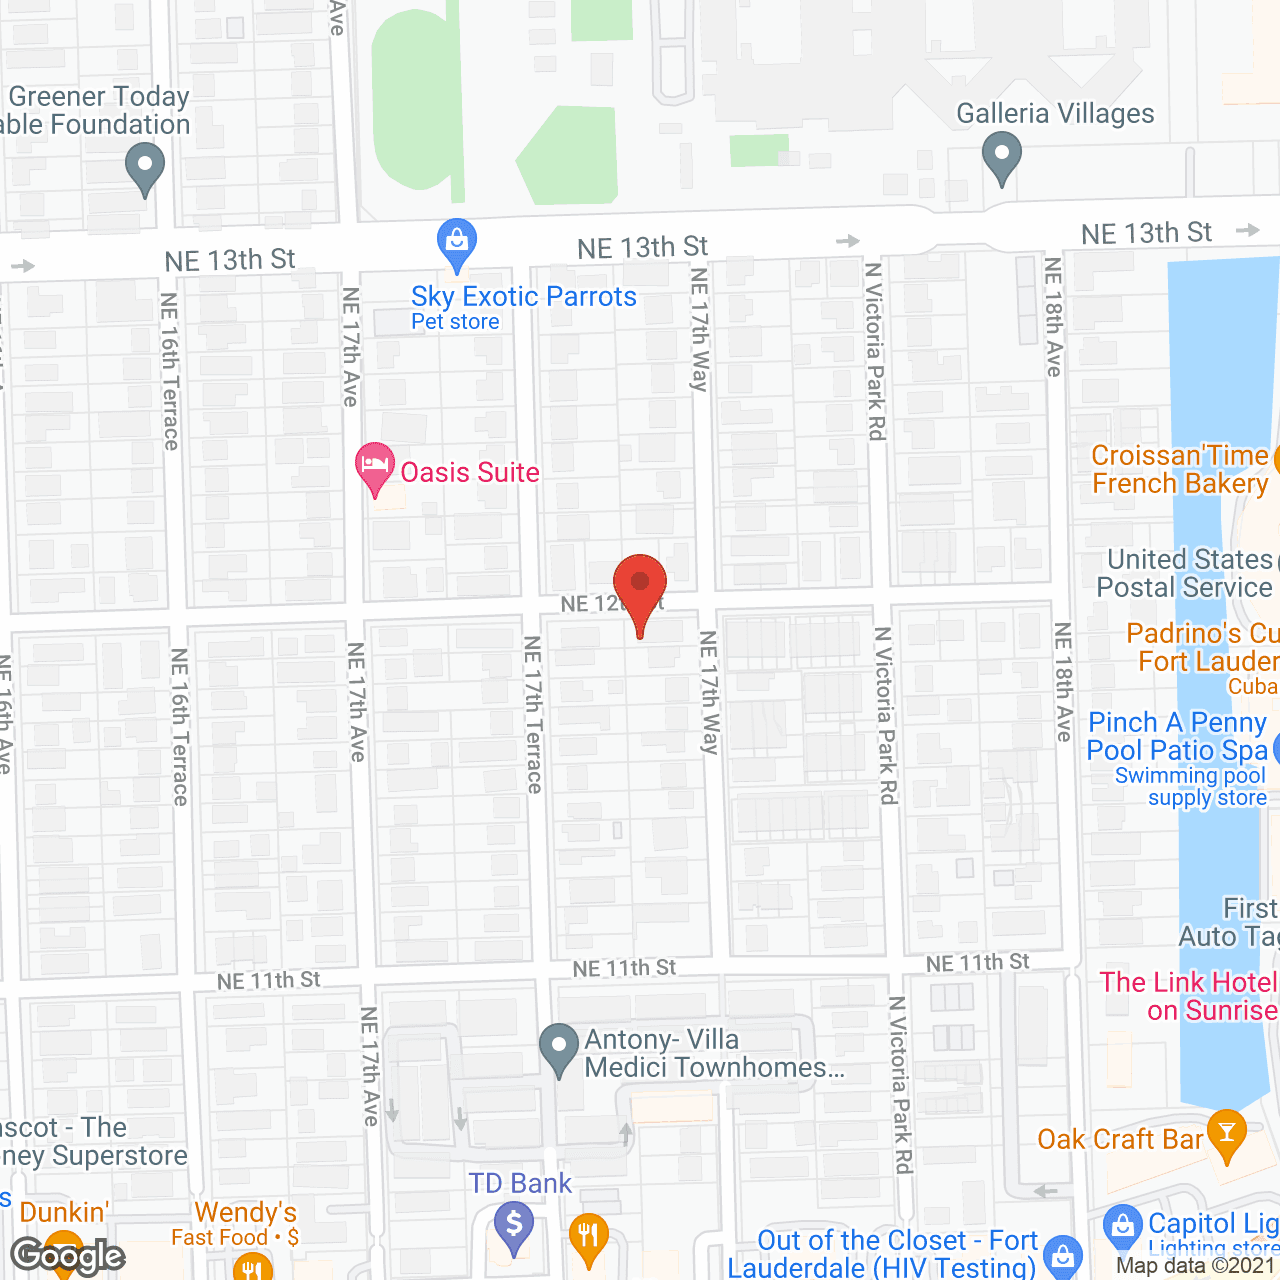 Upside Fort Lauderdale in google map